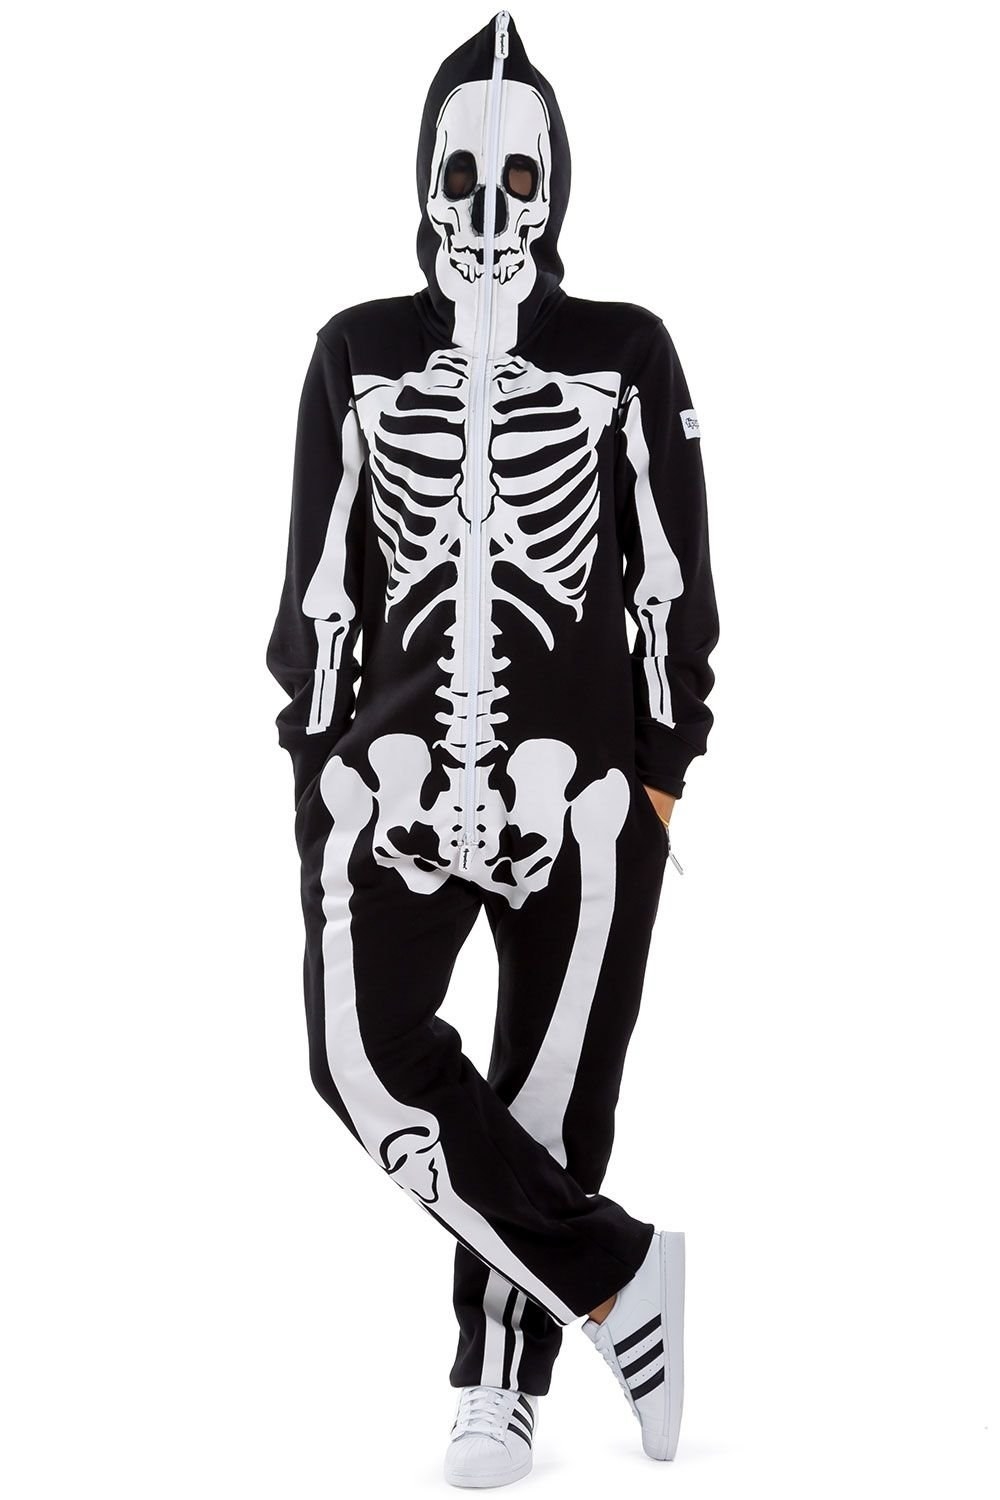 The skeleton onesie fully zipped up.